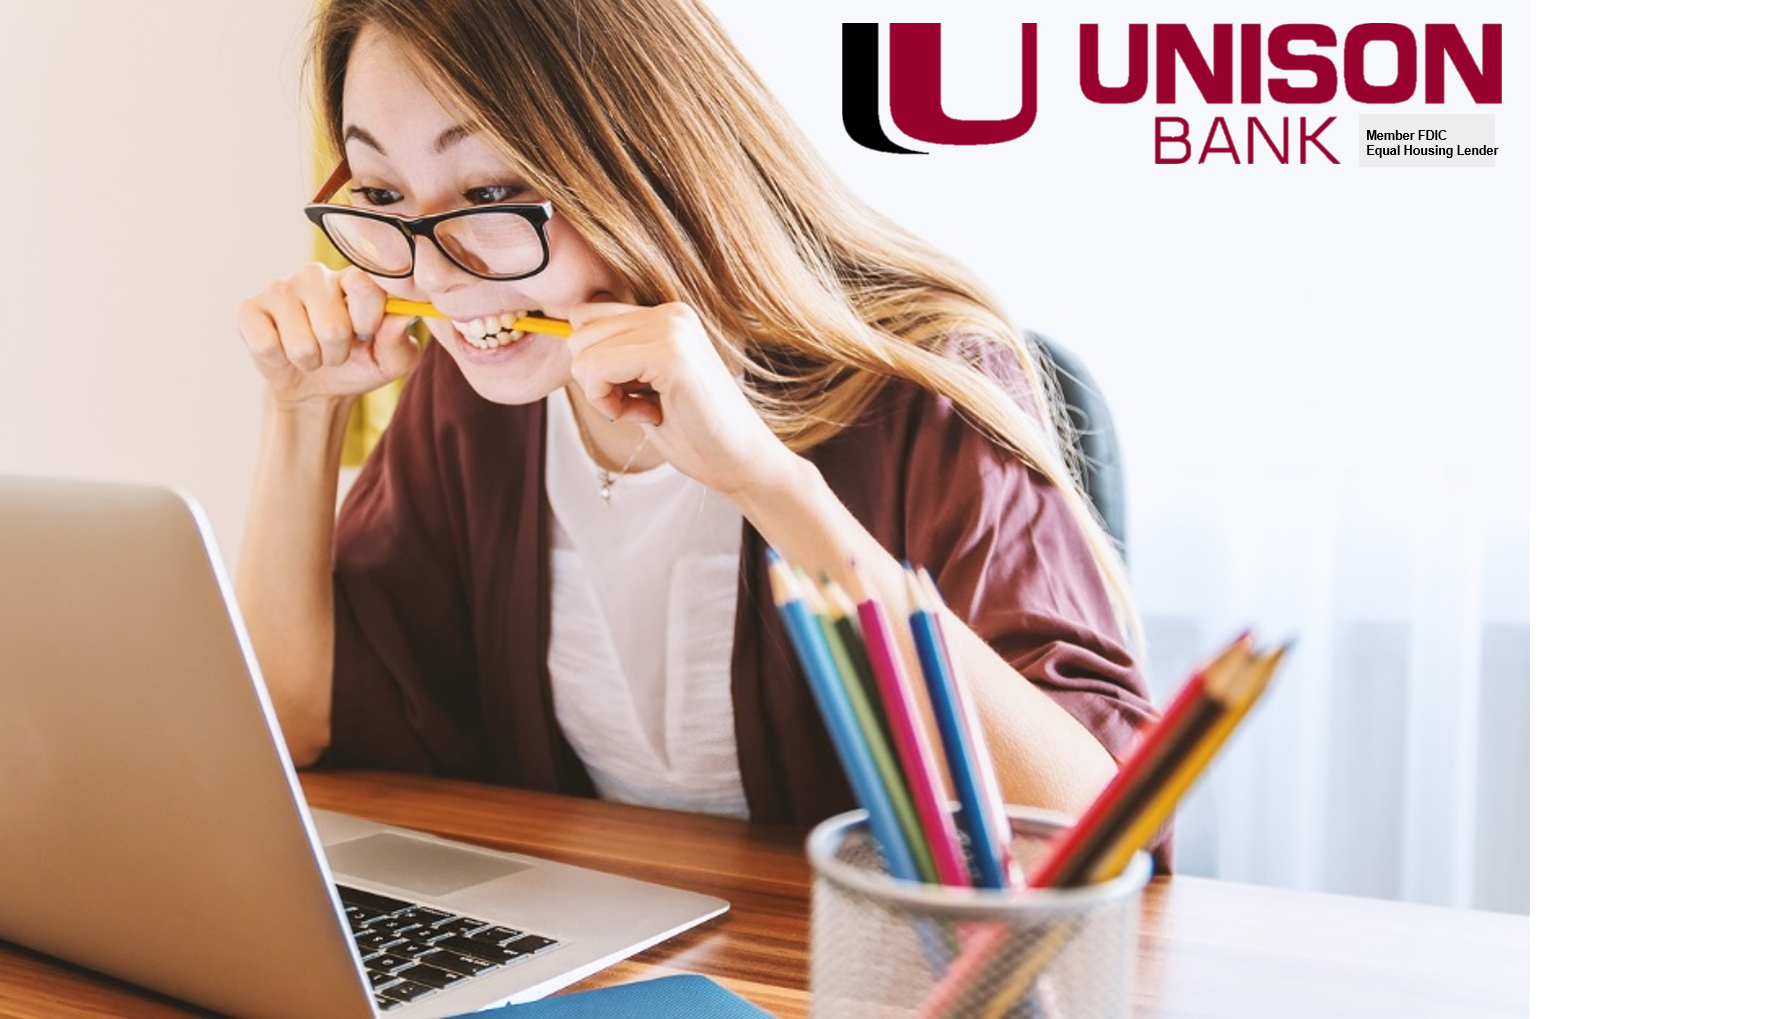 Unison Bank has student loans.